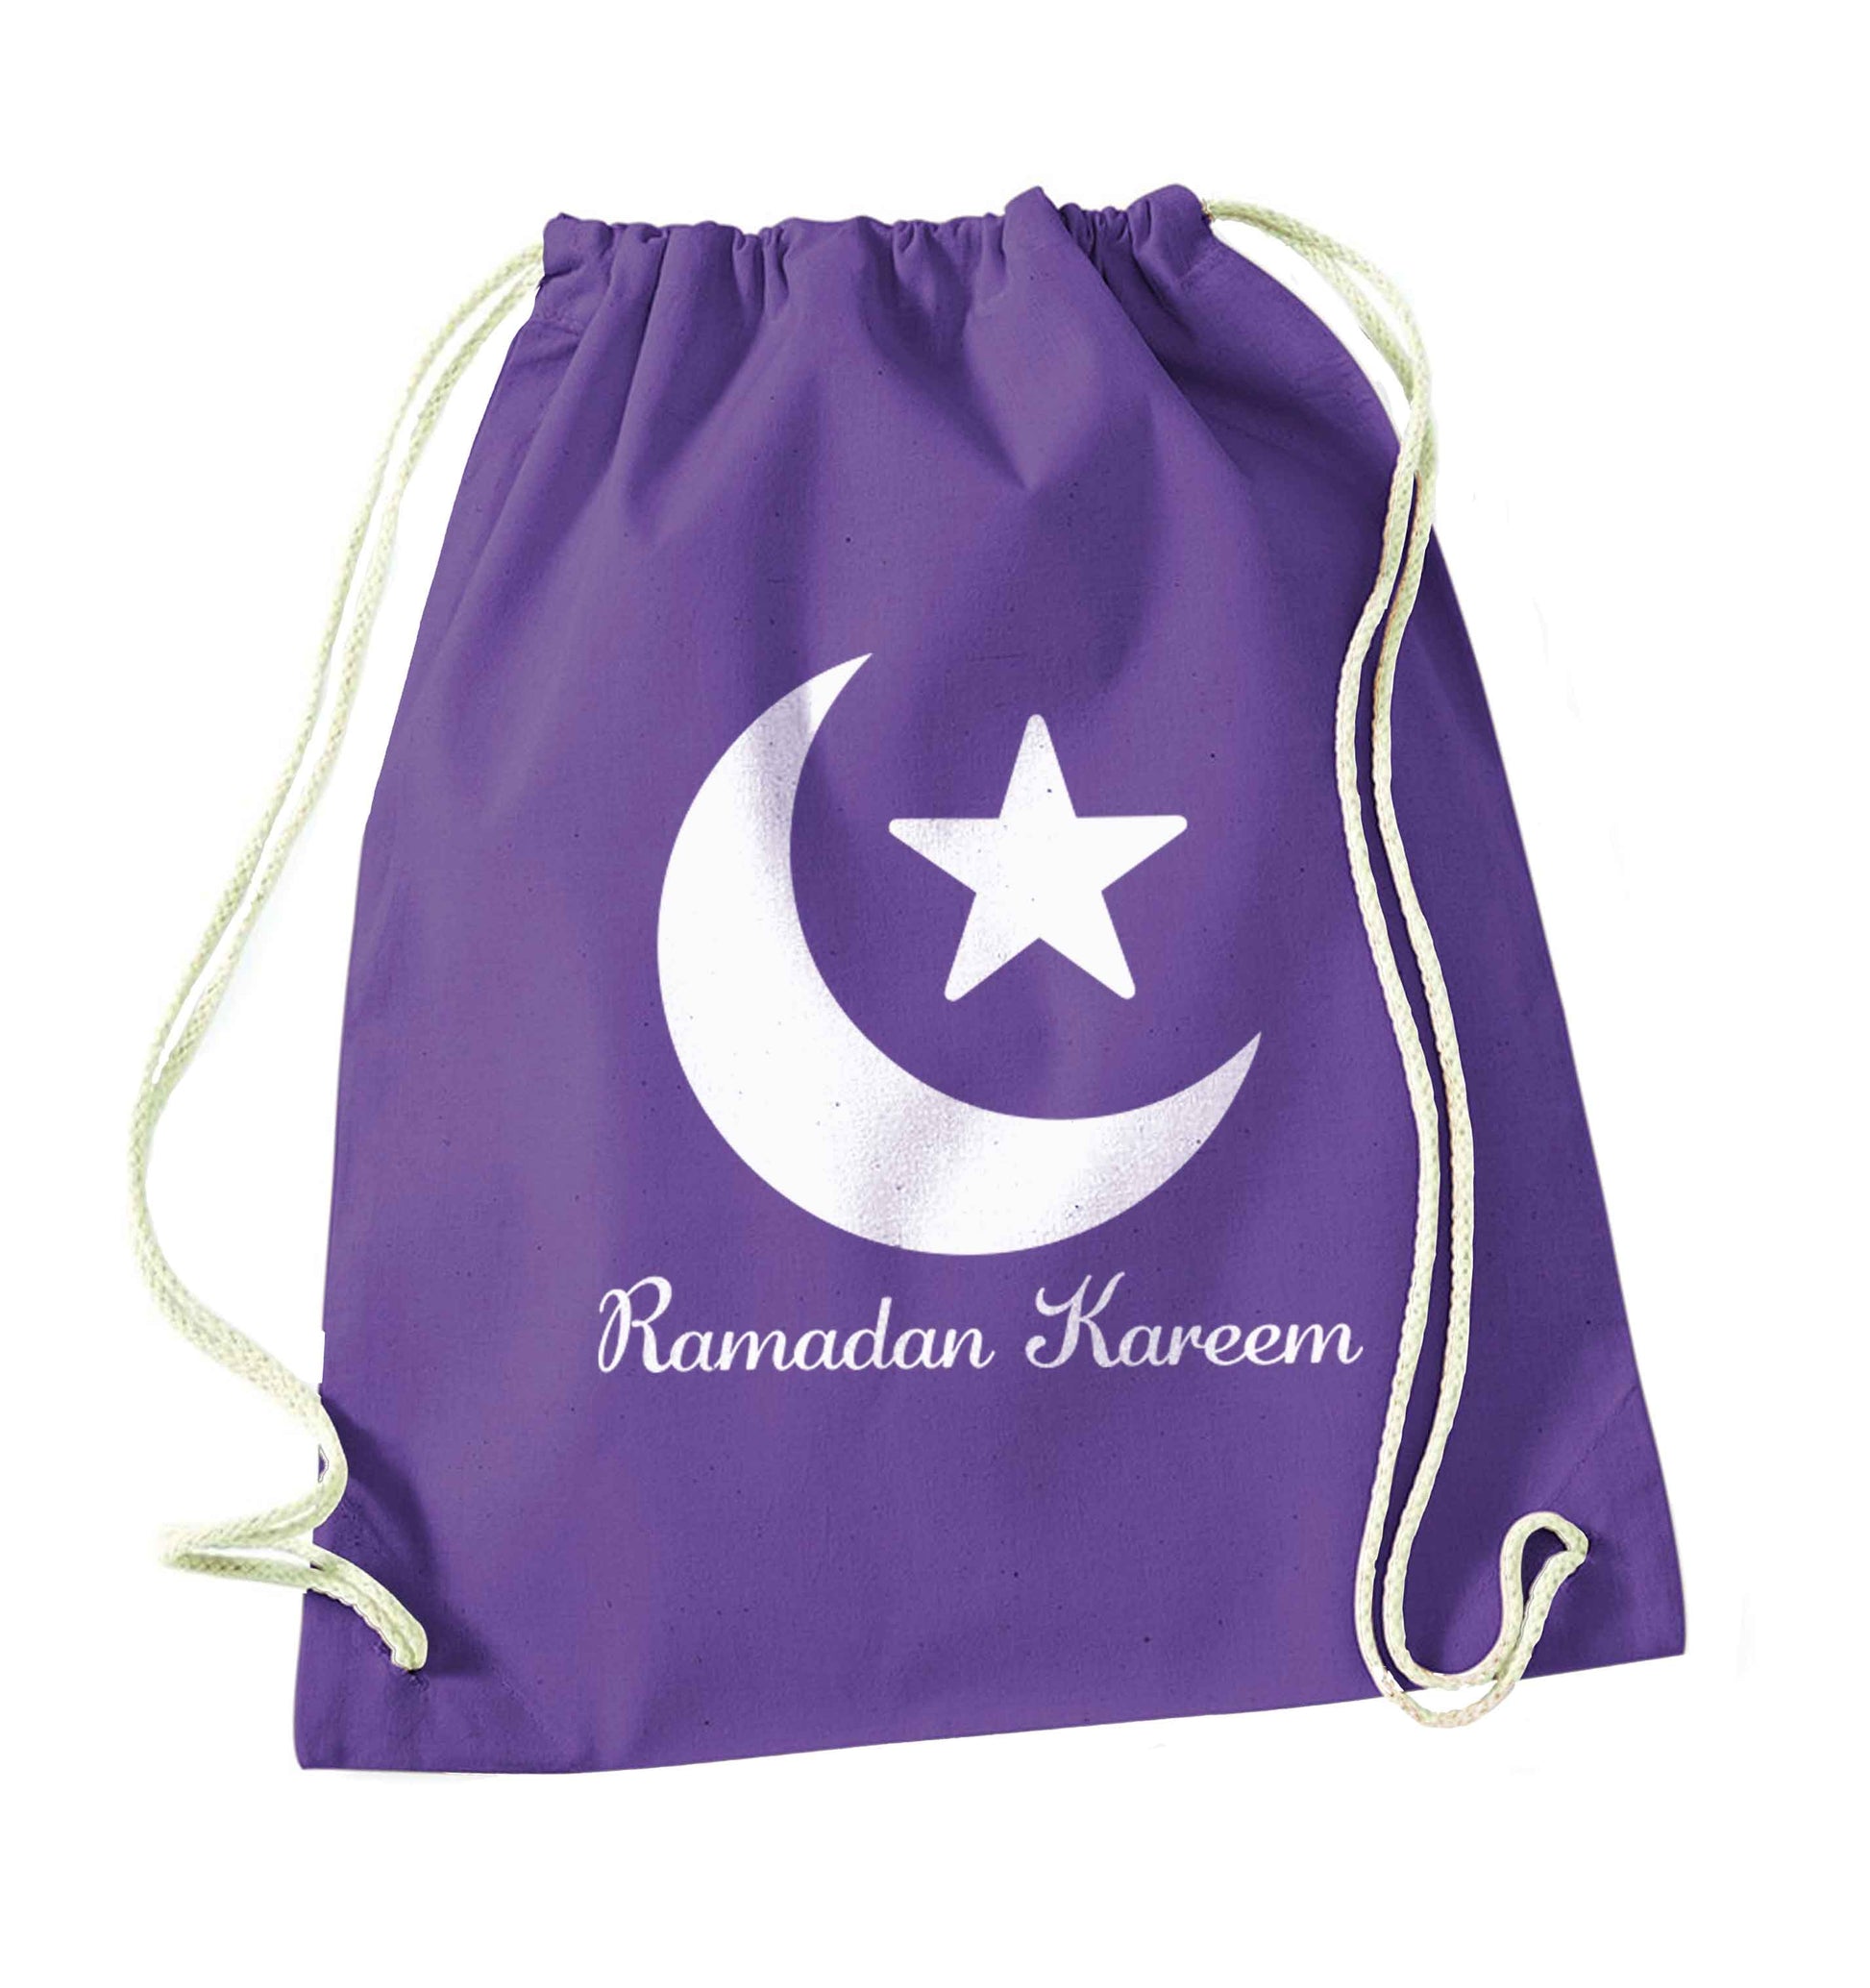 Ramadan kareem purple drawstring bag